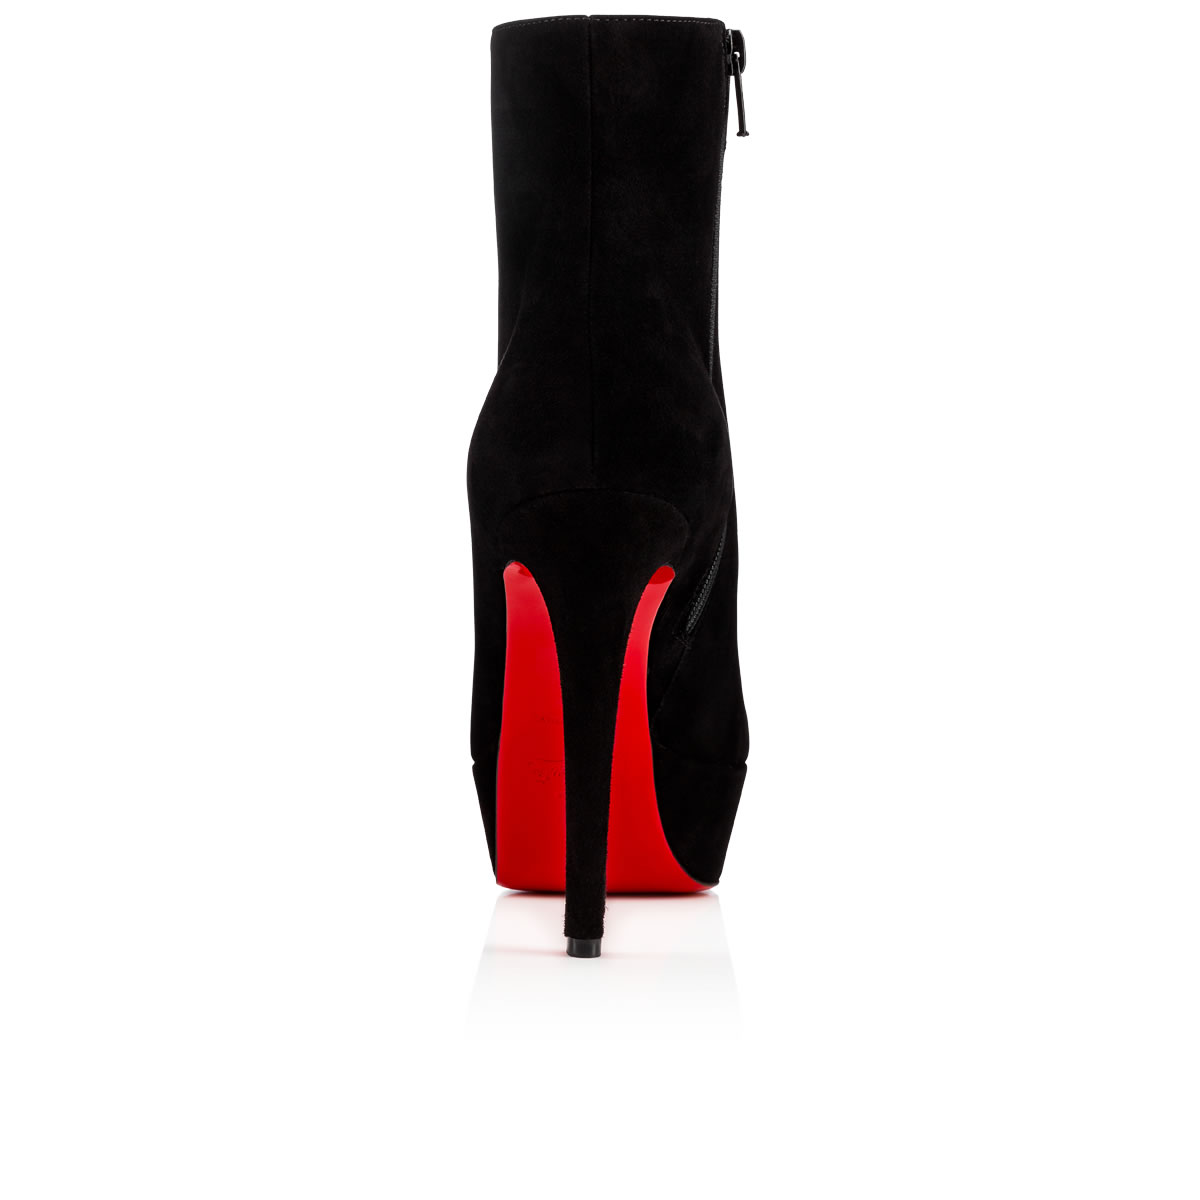 BIANCA BOOTY 120 120 BLACK Veau velours - Shoes - Women 